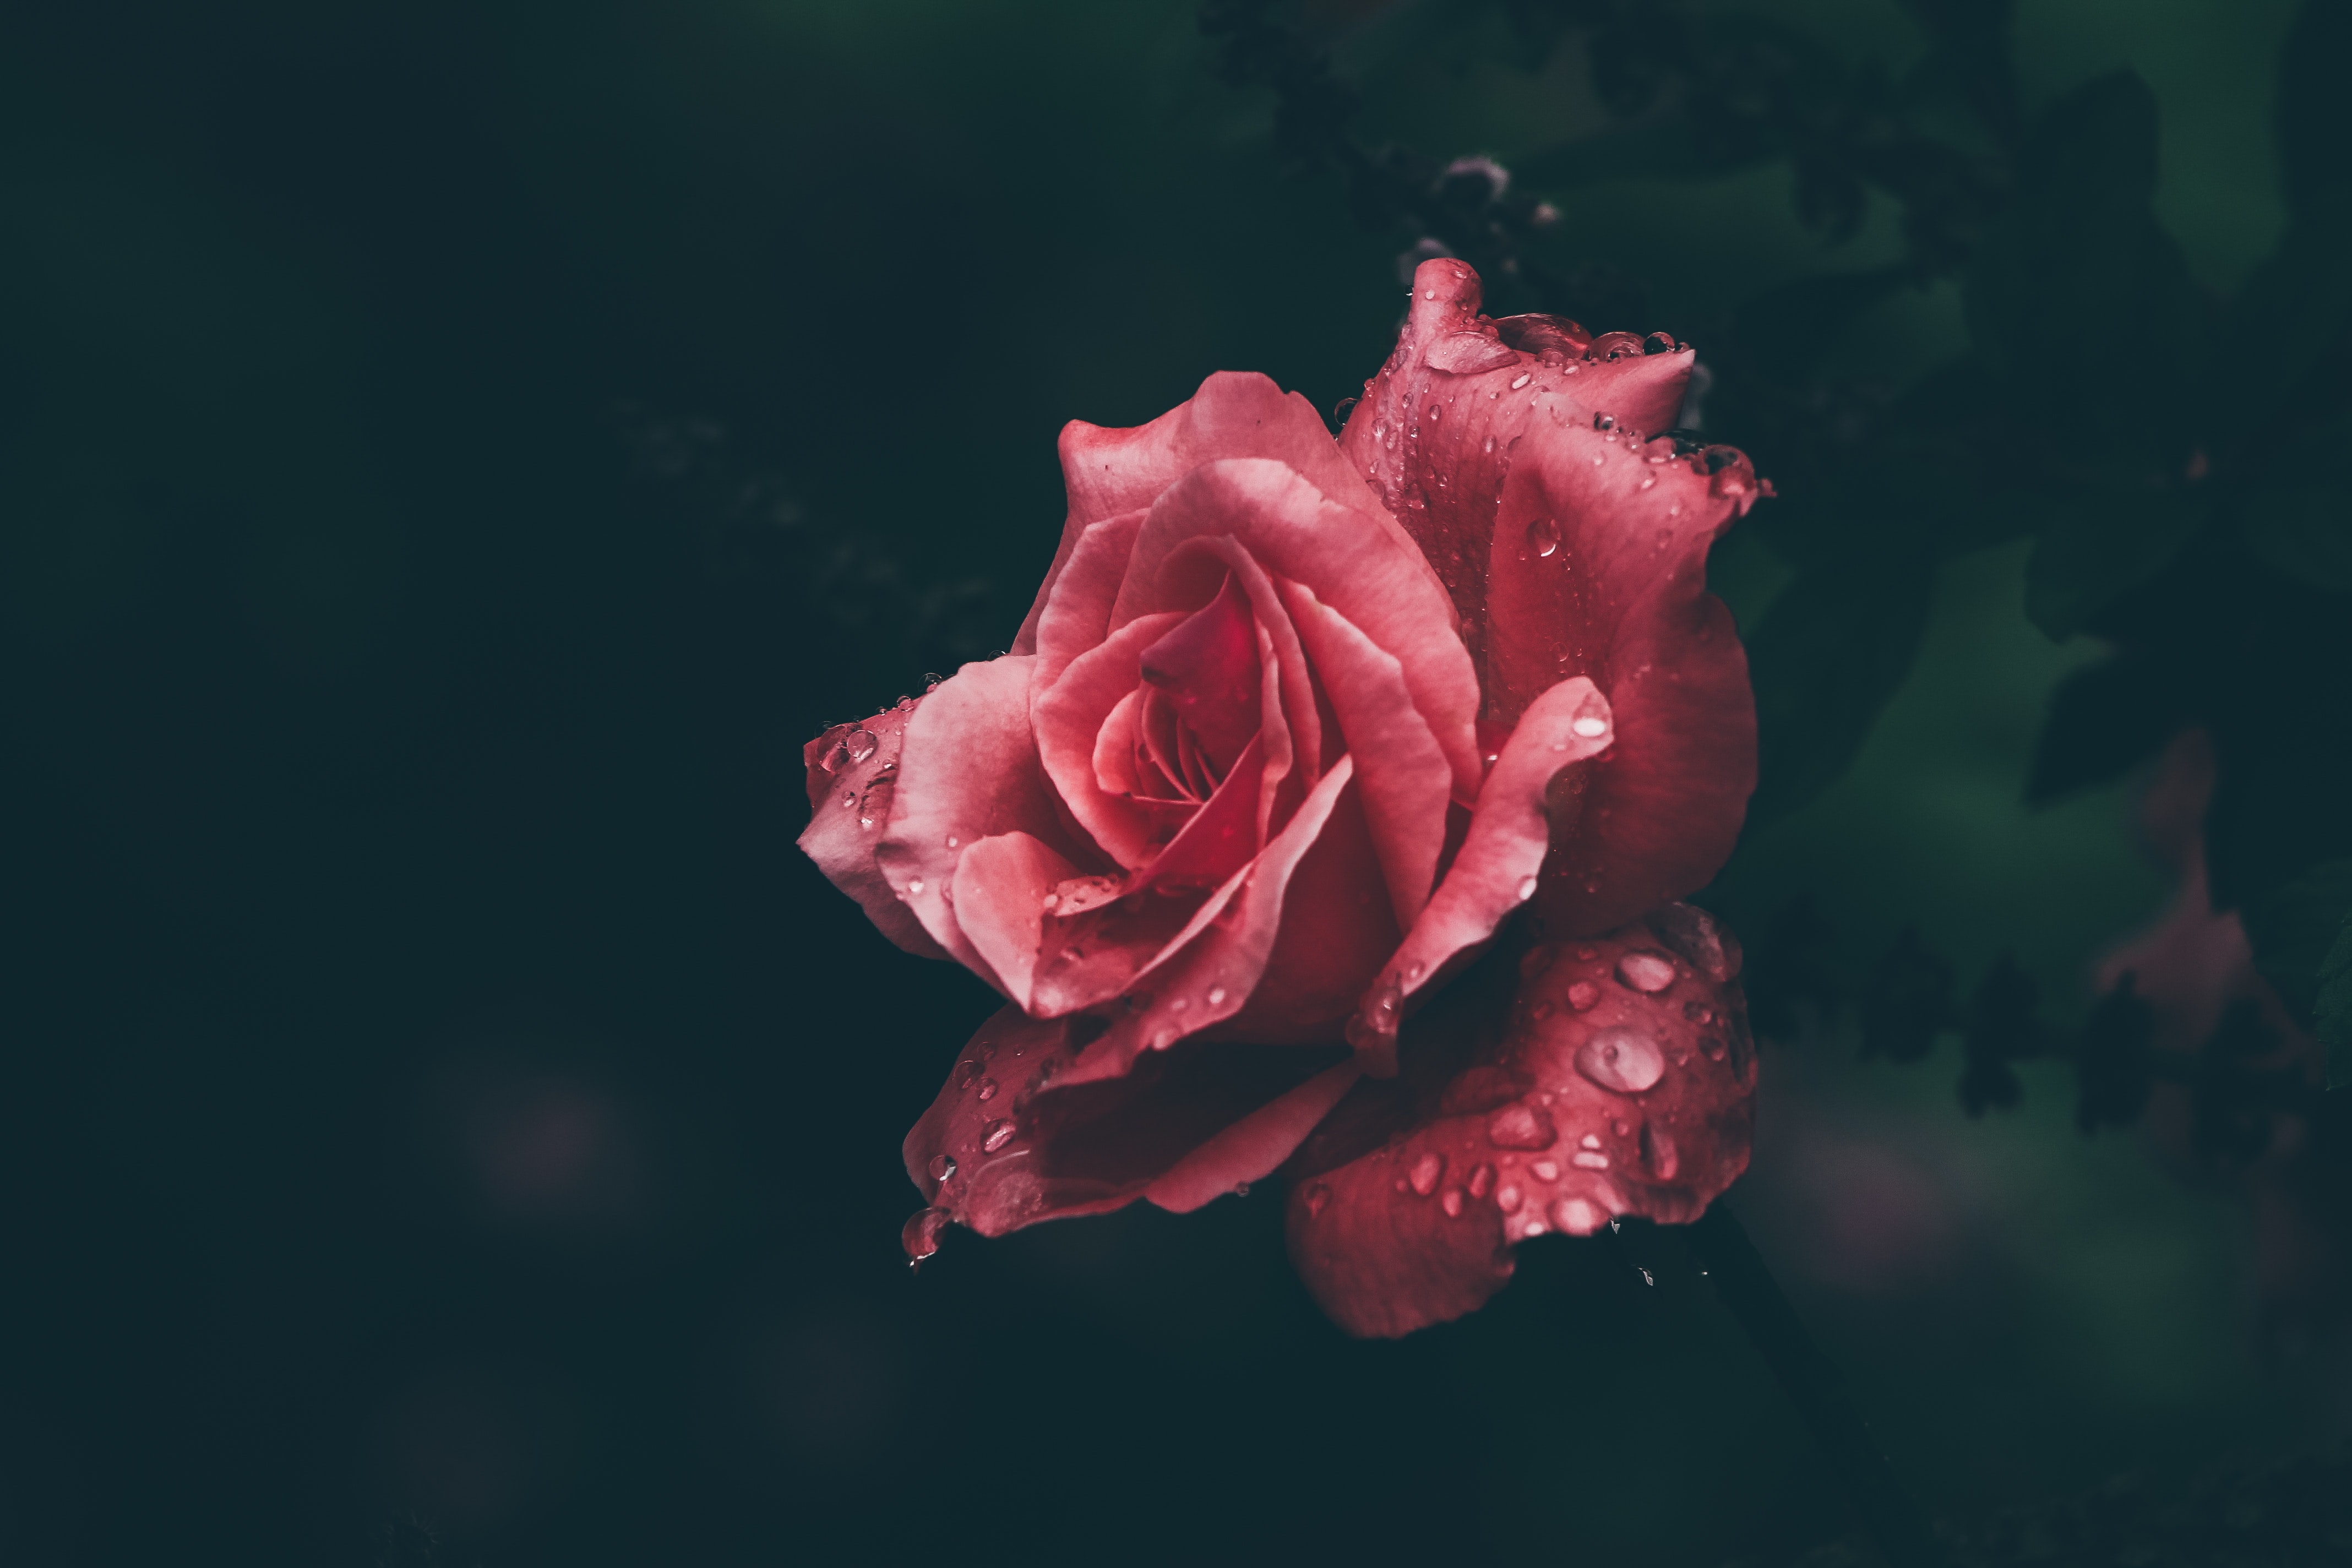 Rose photo